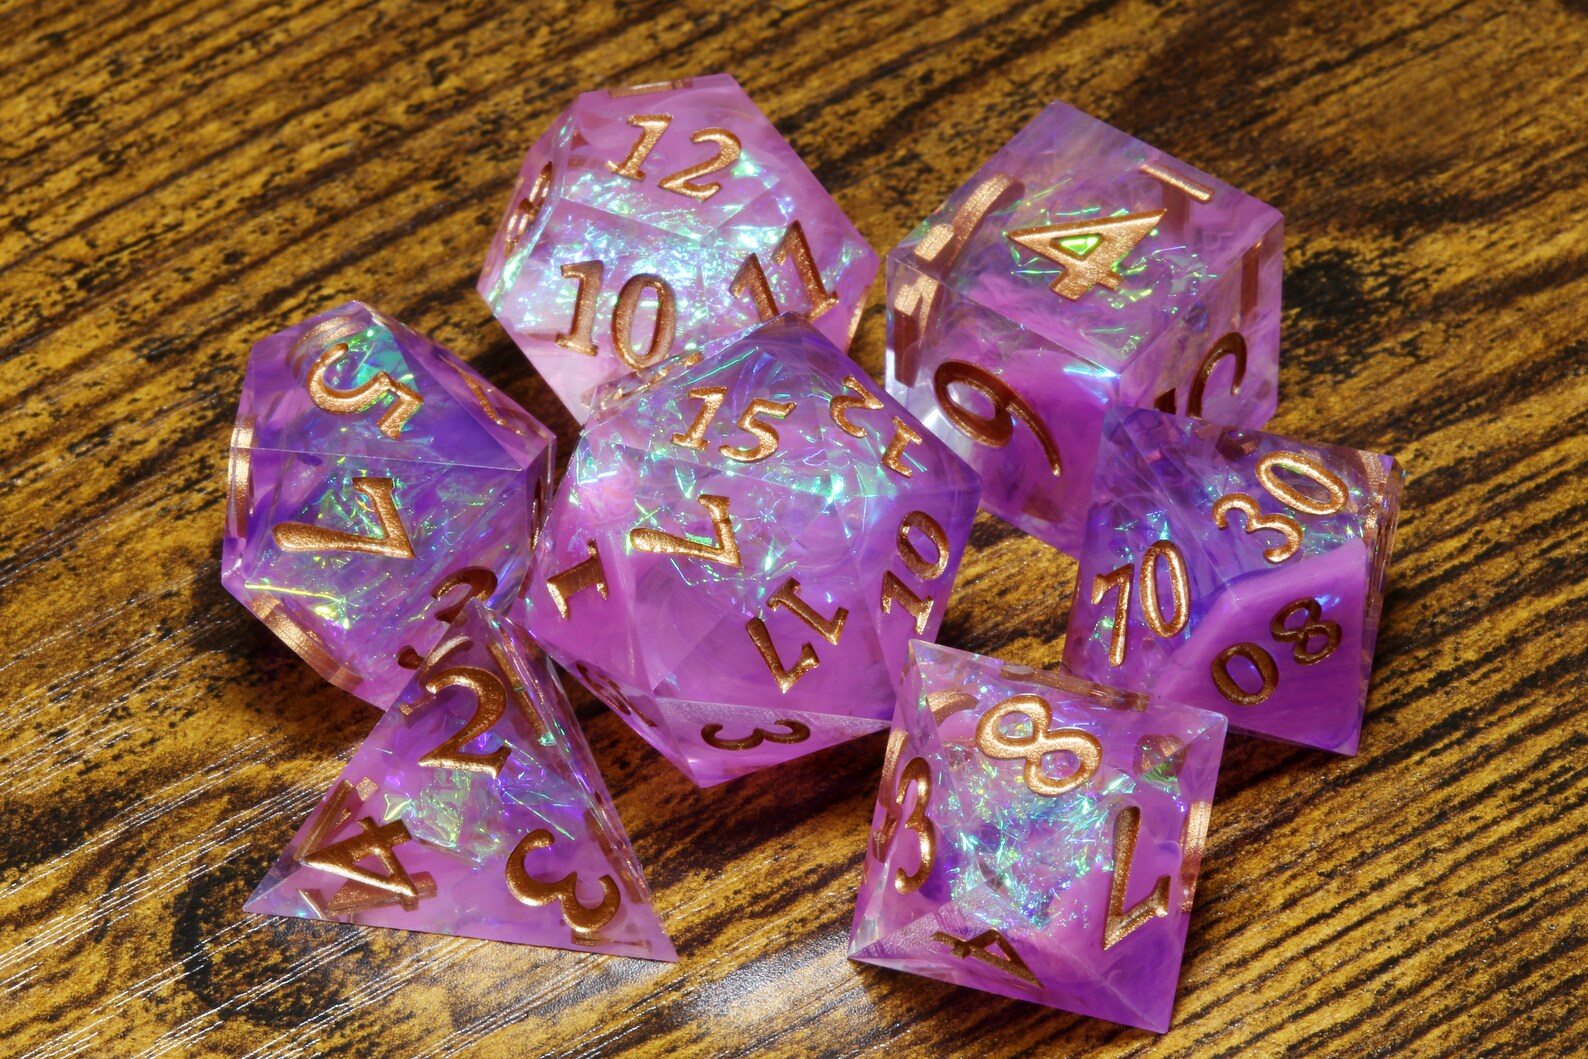 Endless Horizon dice set - Purple sharp edge dice set with holographic foil inclusions - The Wizard's Vault